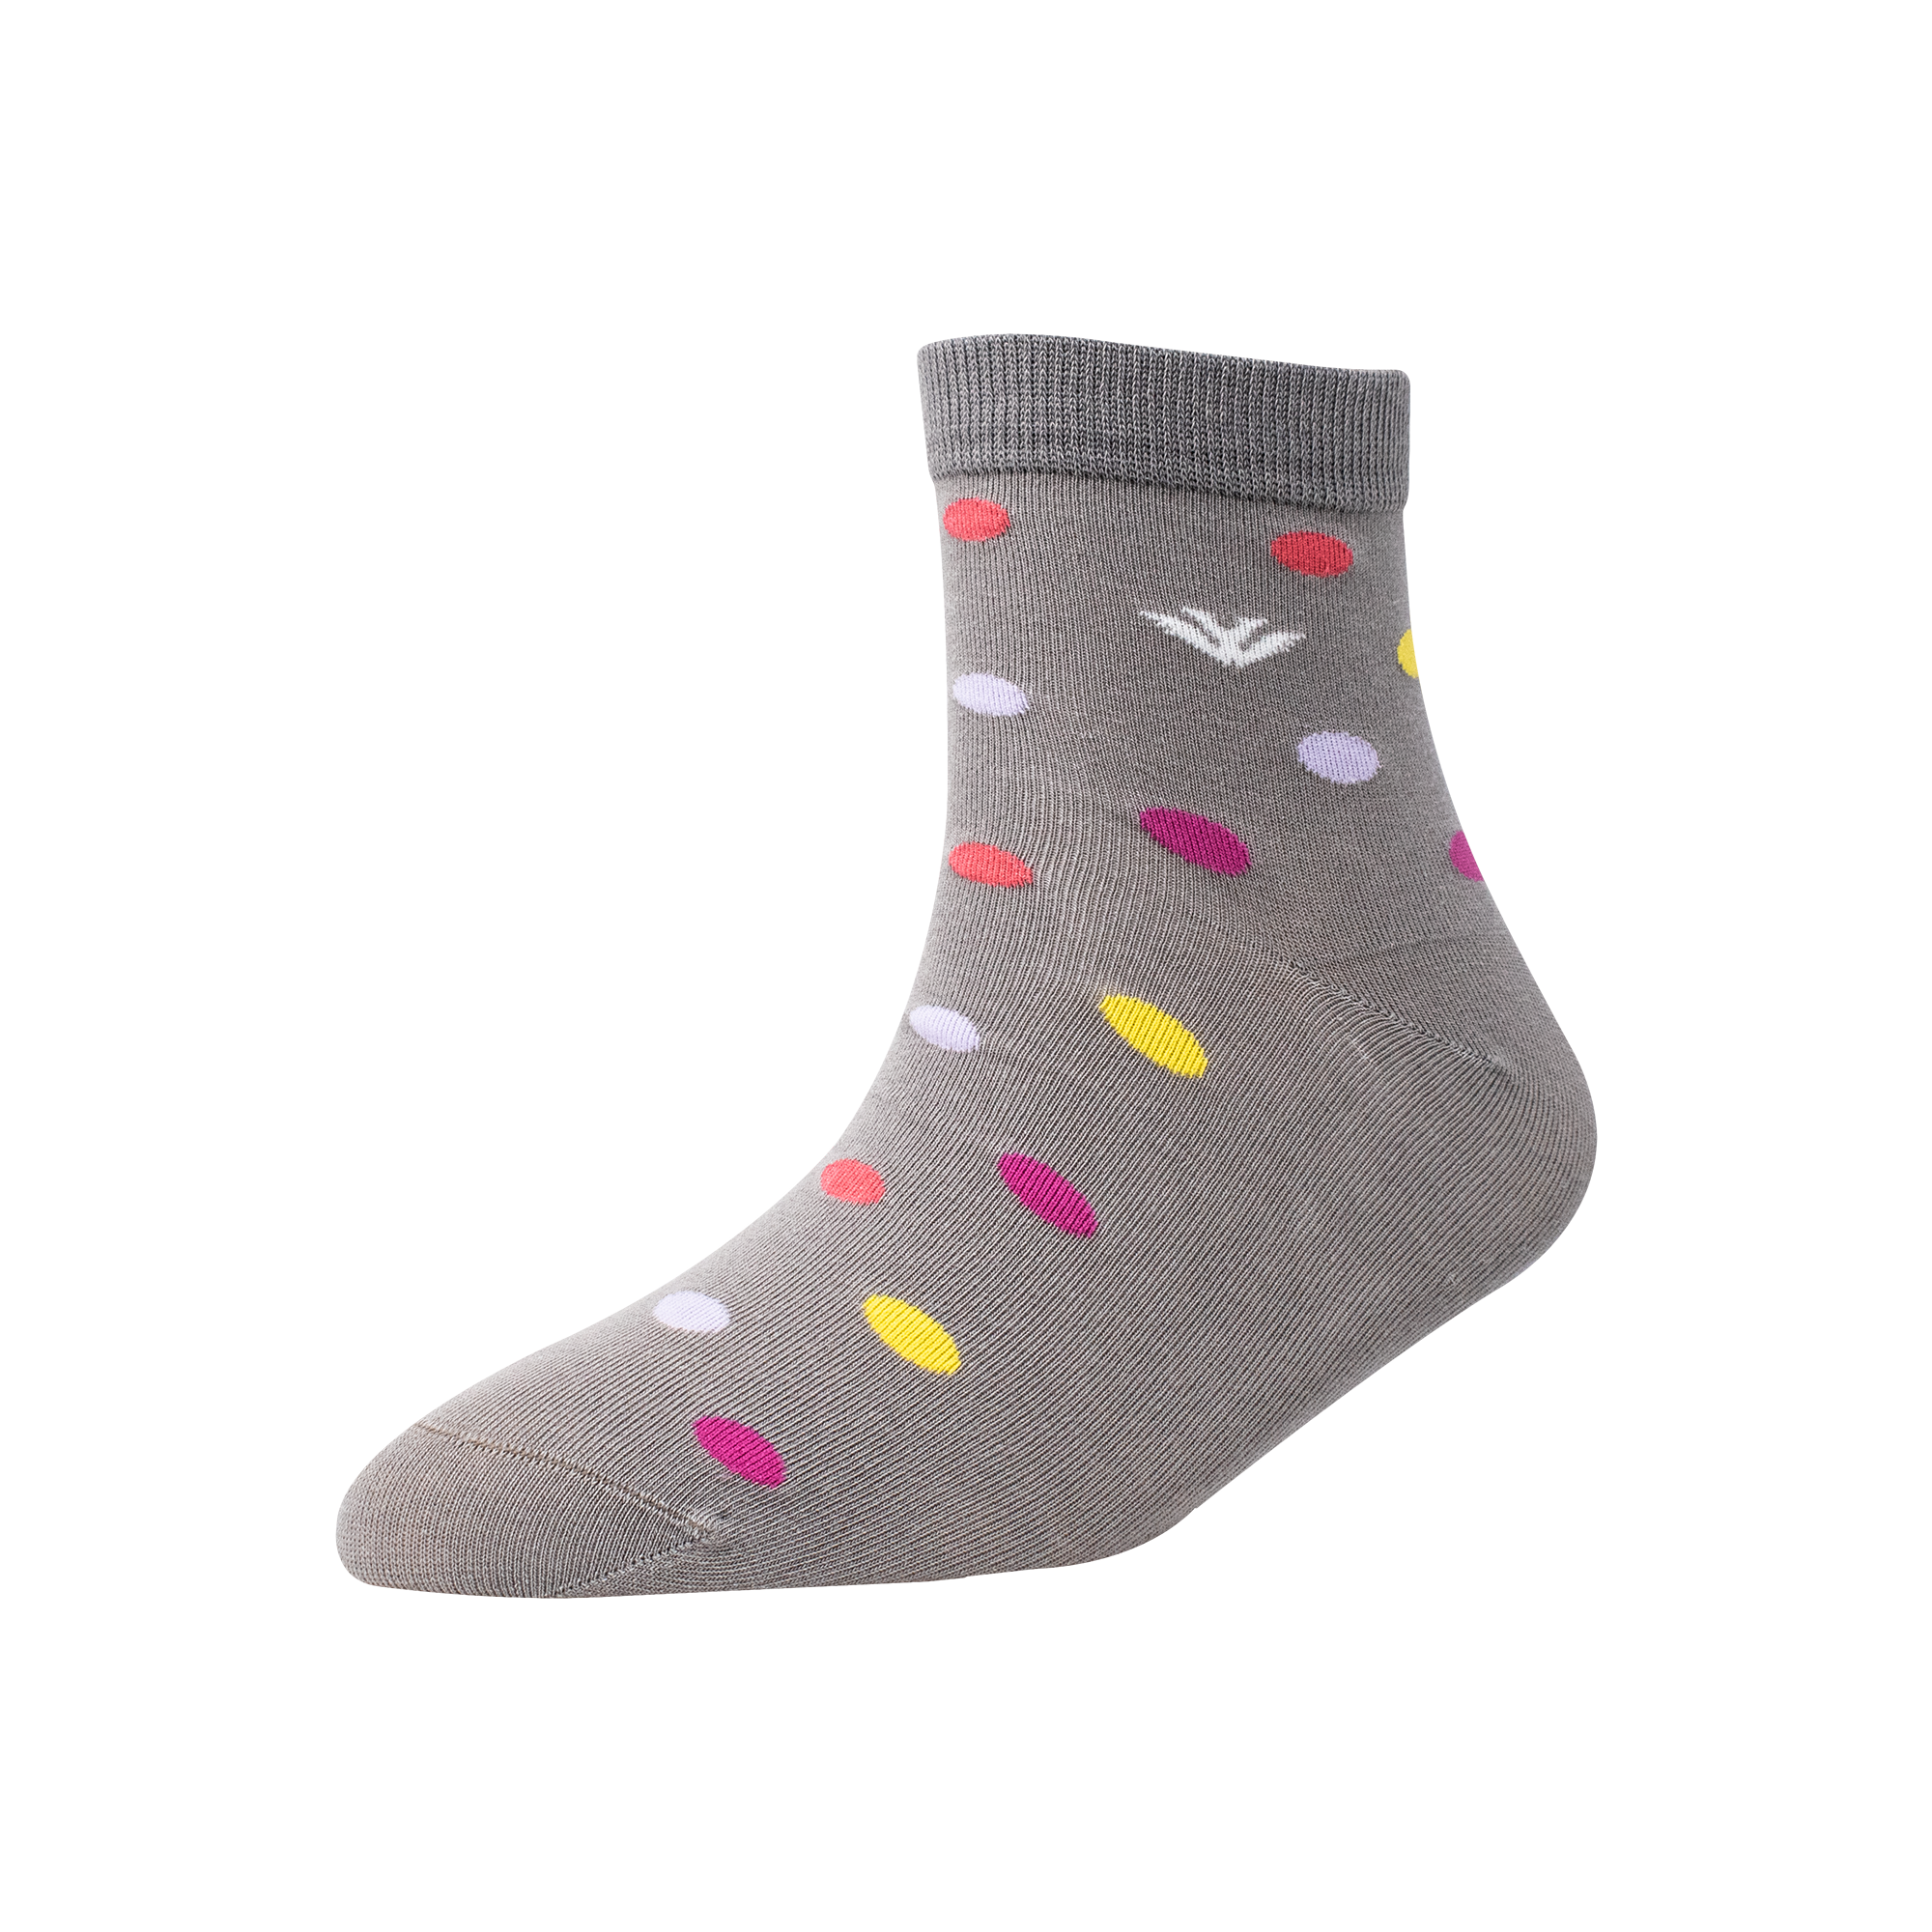 Men's YW-M1-271 Multi Colour Circle Ankle Socks